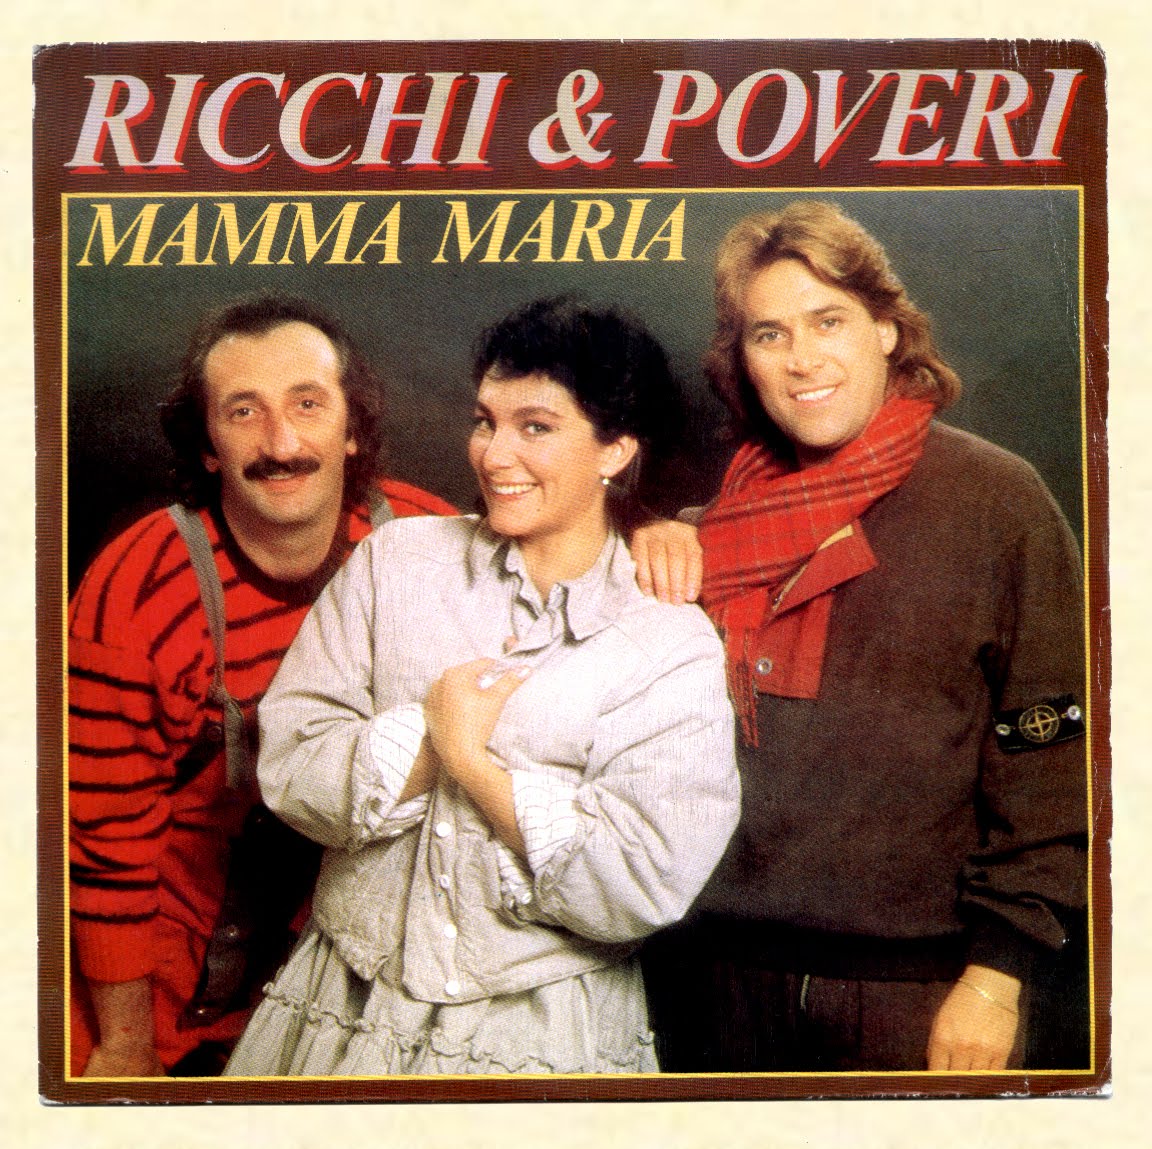 Mamma maria ricchi e. 1982 — Mamma Maria. Рики е повери. Рики и повери 1981.